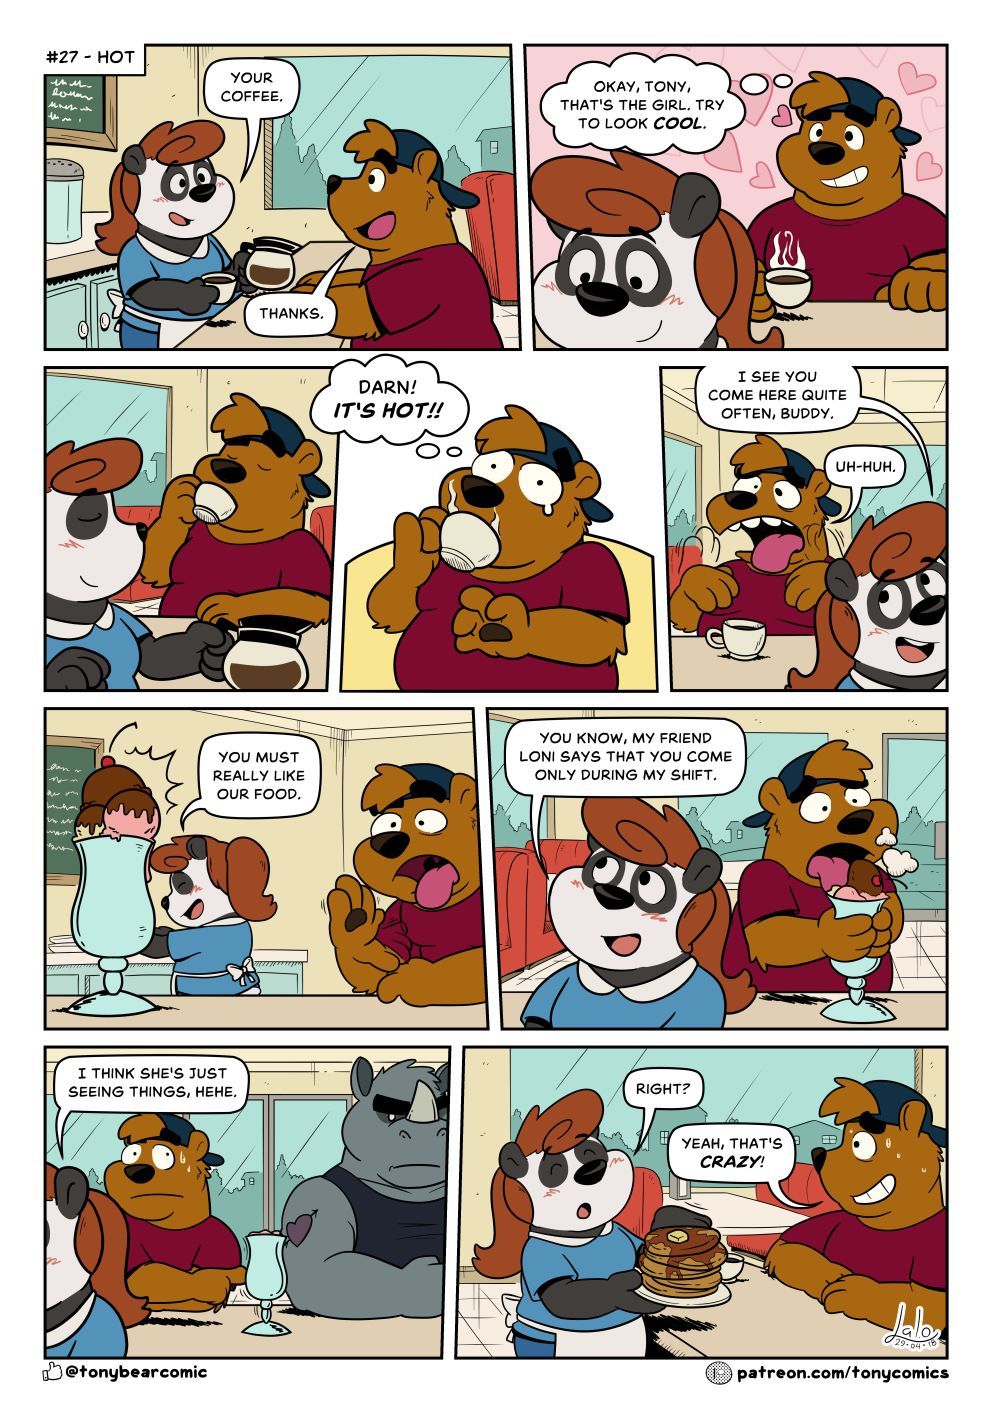 [FurryDude88] Tony Comics [On Going] 125